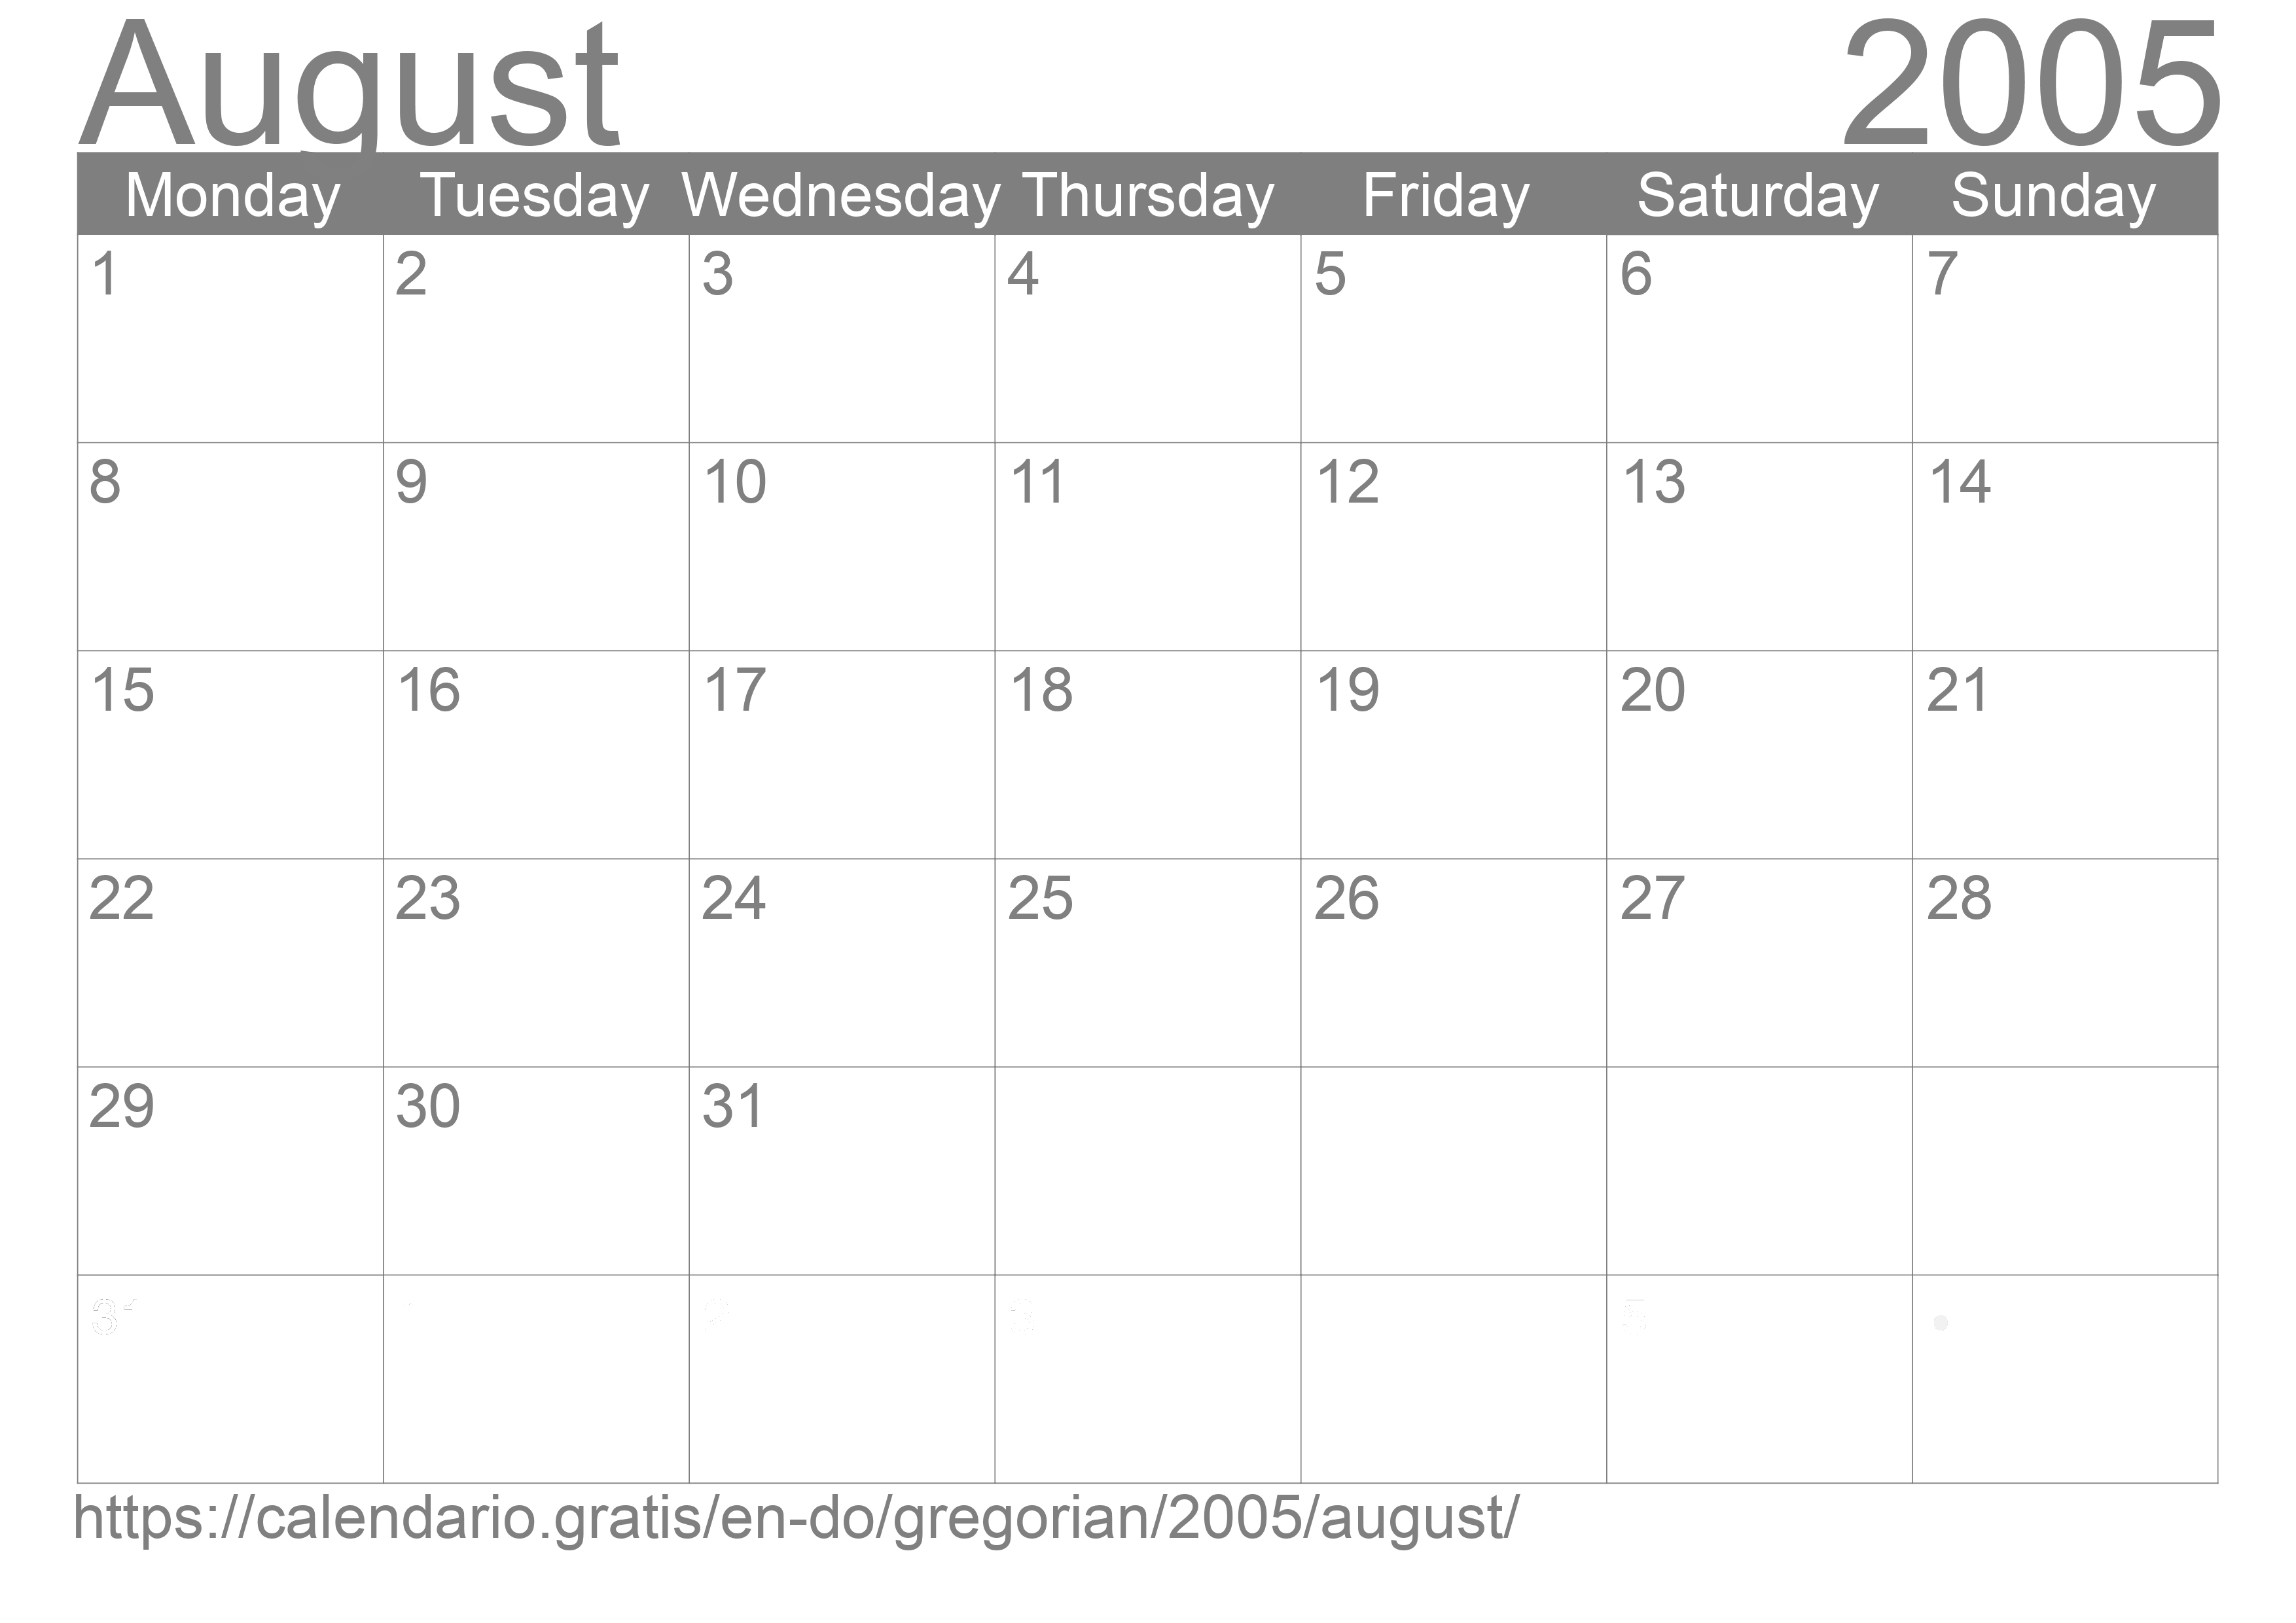 Calendar August 2005 to print